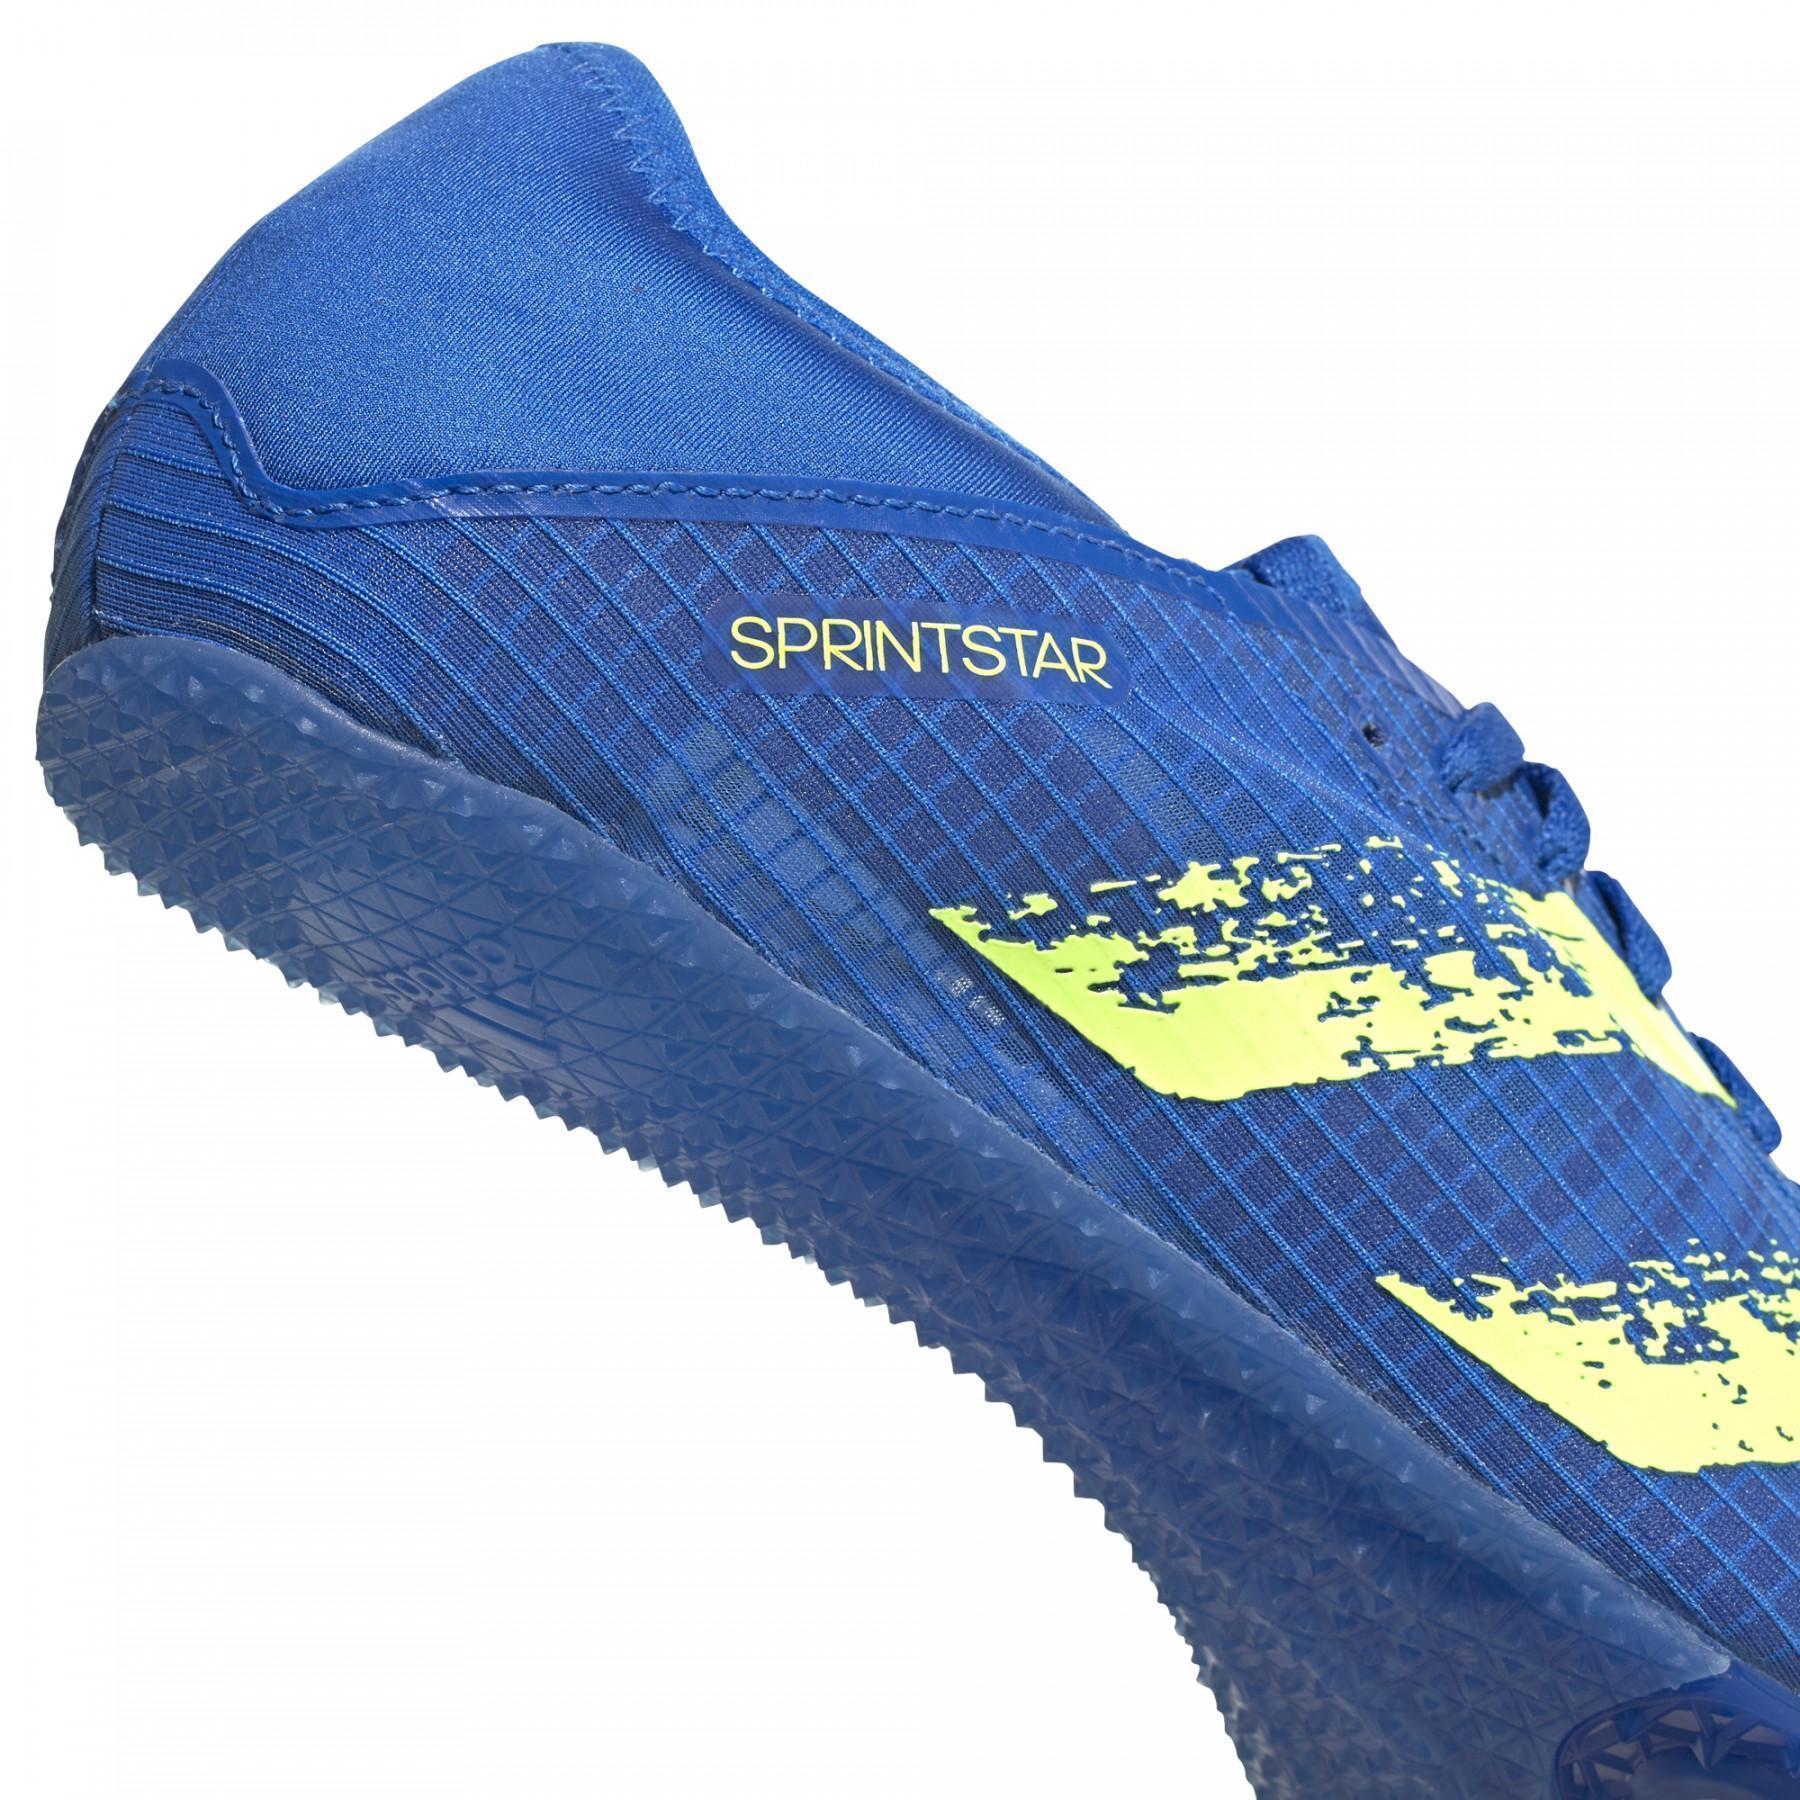 Zapatos adidas Sprintstar Spikes